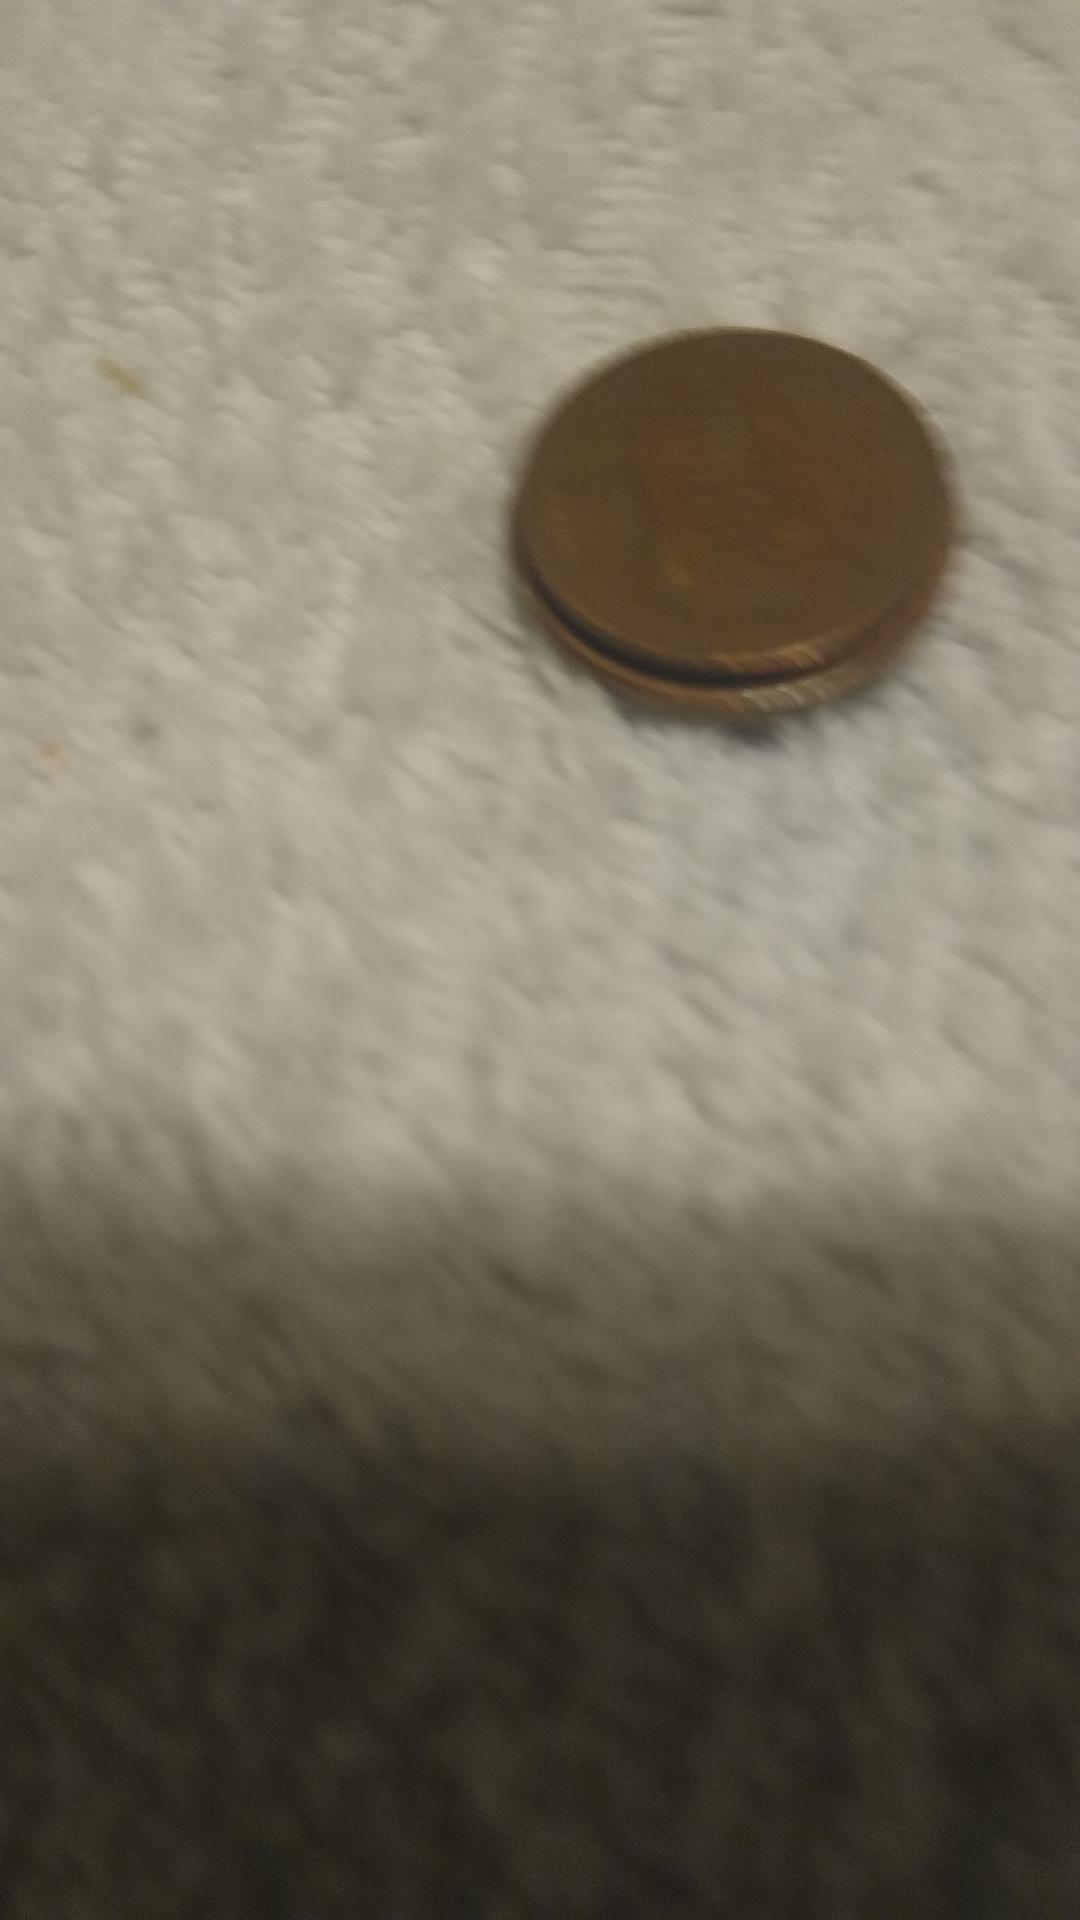 worn penny 6.jpg